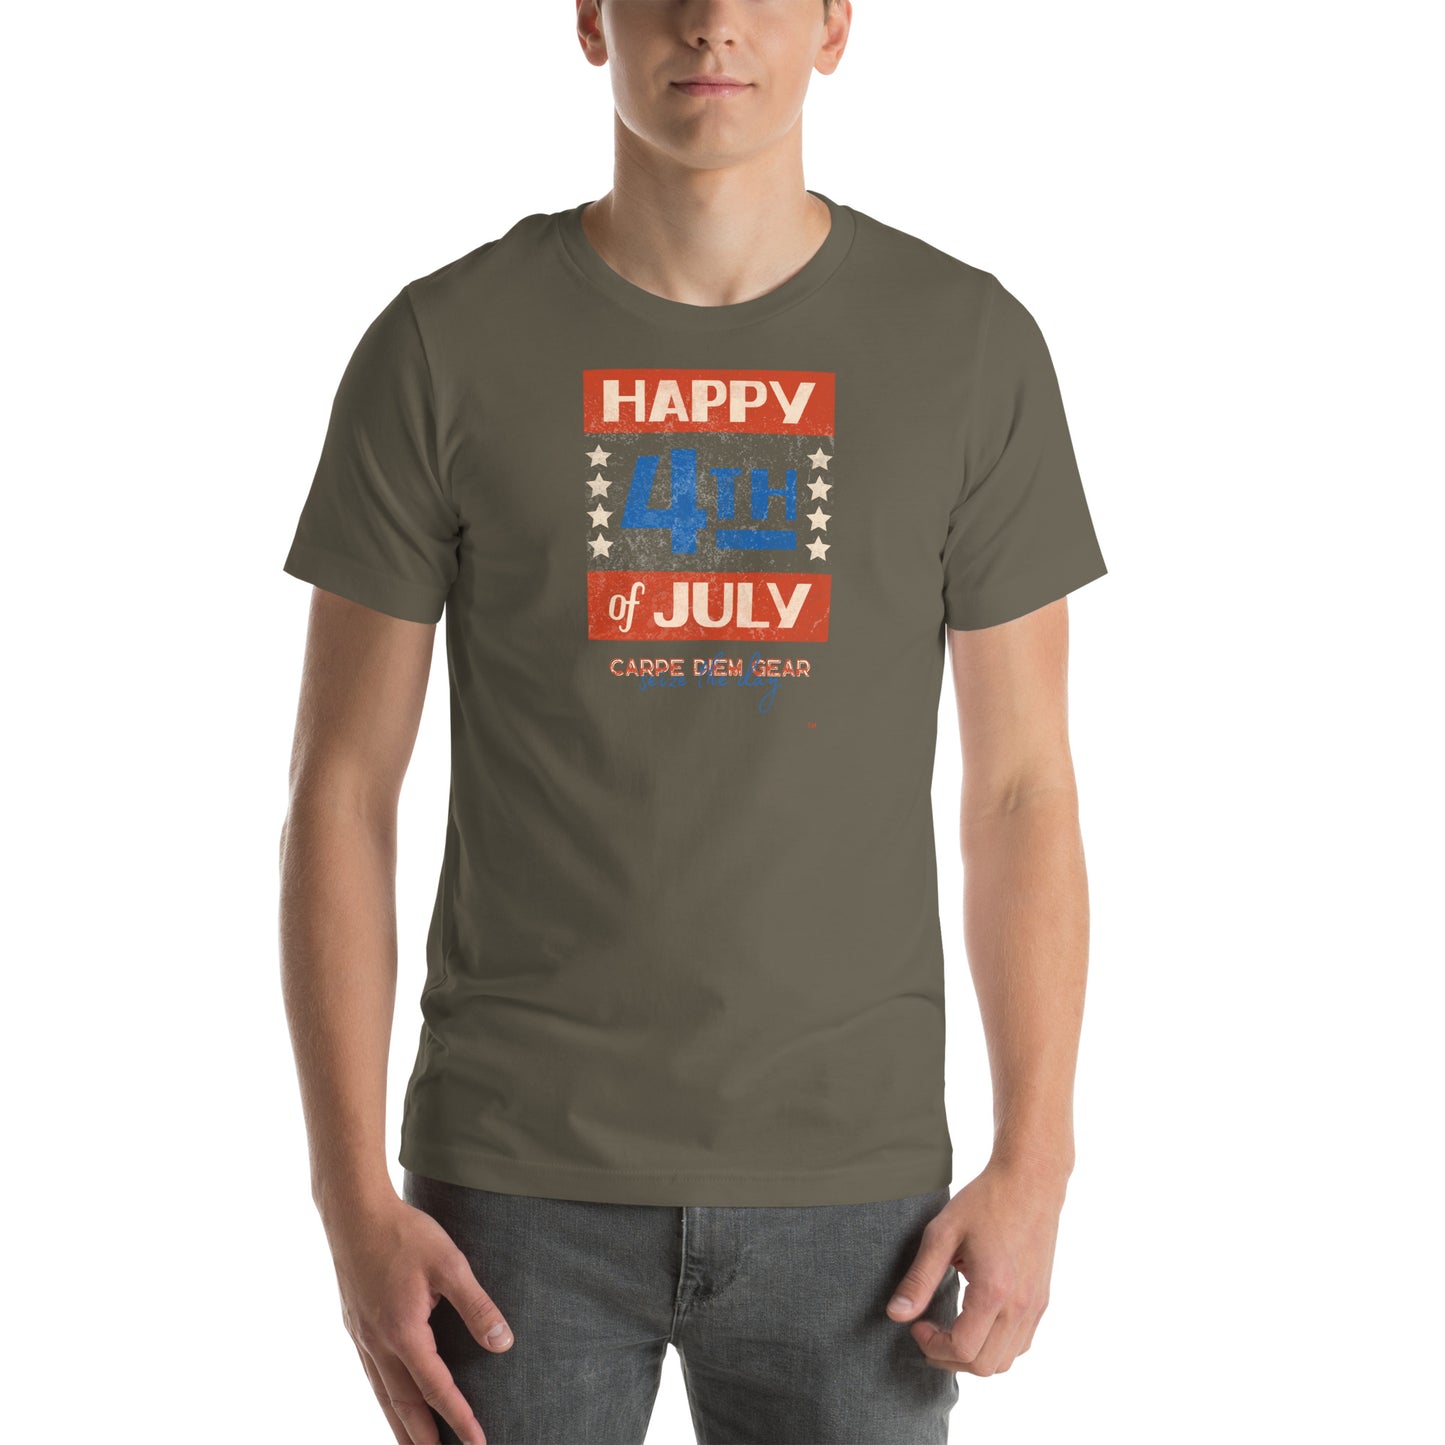 Carpe Diem Gear | Americana  | Happy 4th of July | Unisex 100% Cotton T-Shirt